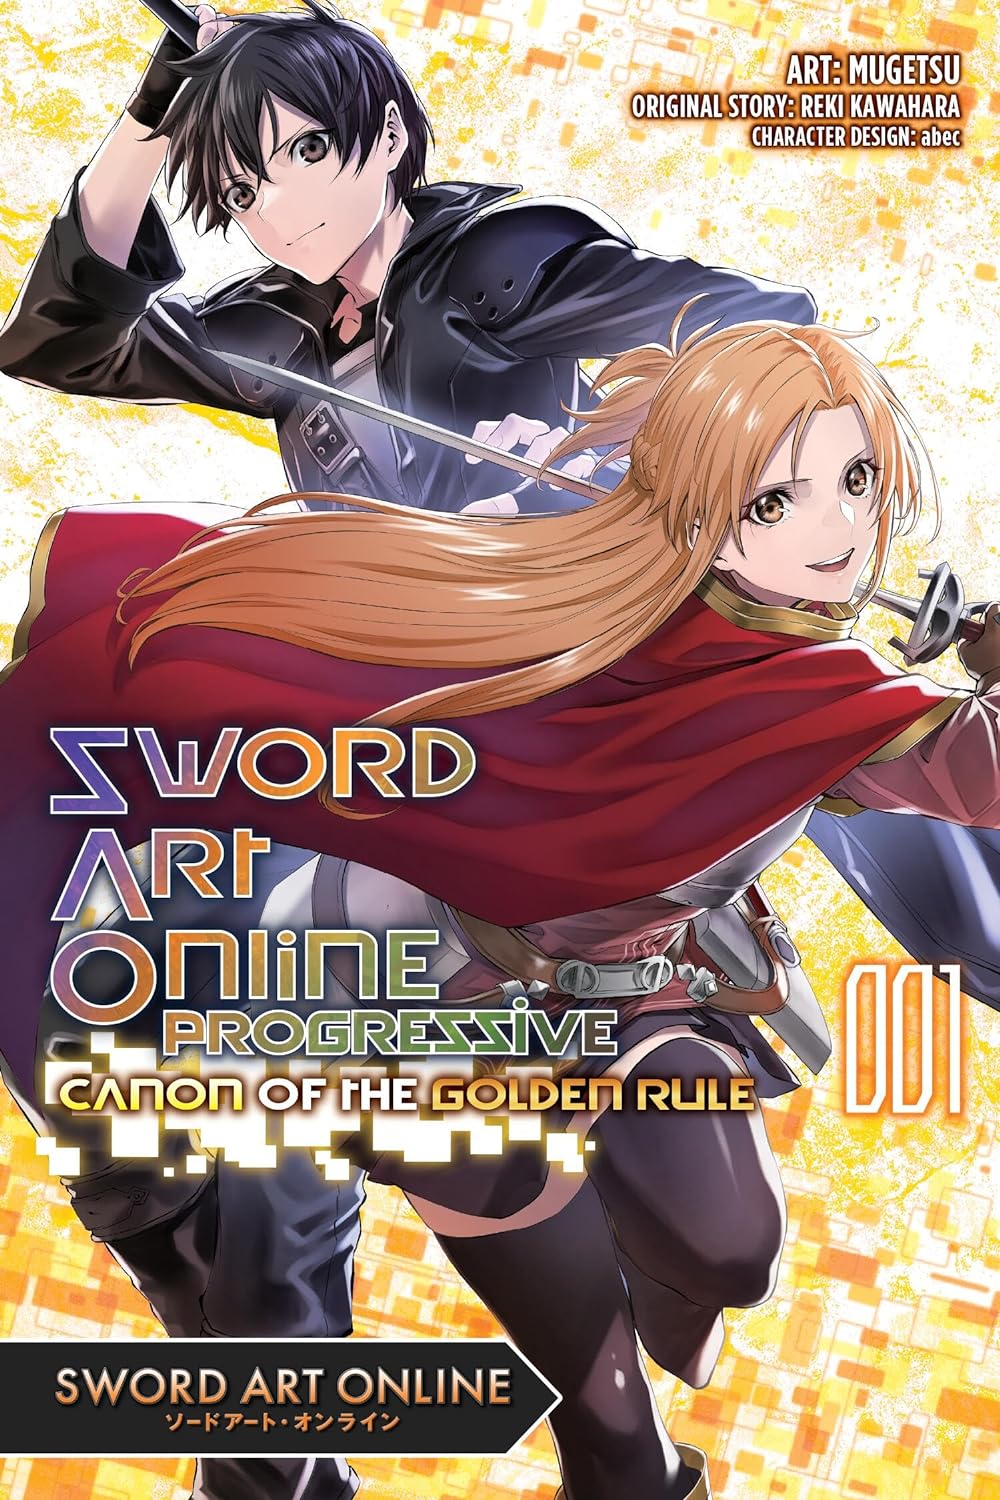 Sword Art Online Progressive Canon of the Golden Rule Vol. 01 (Manga)